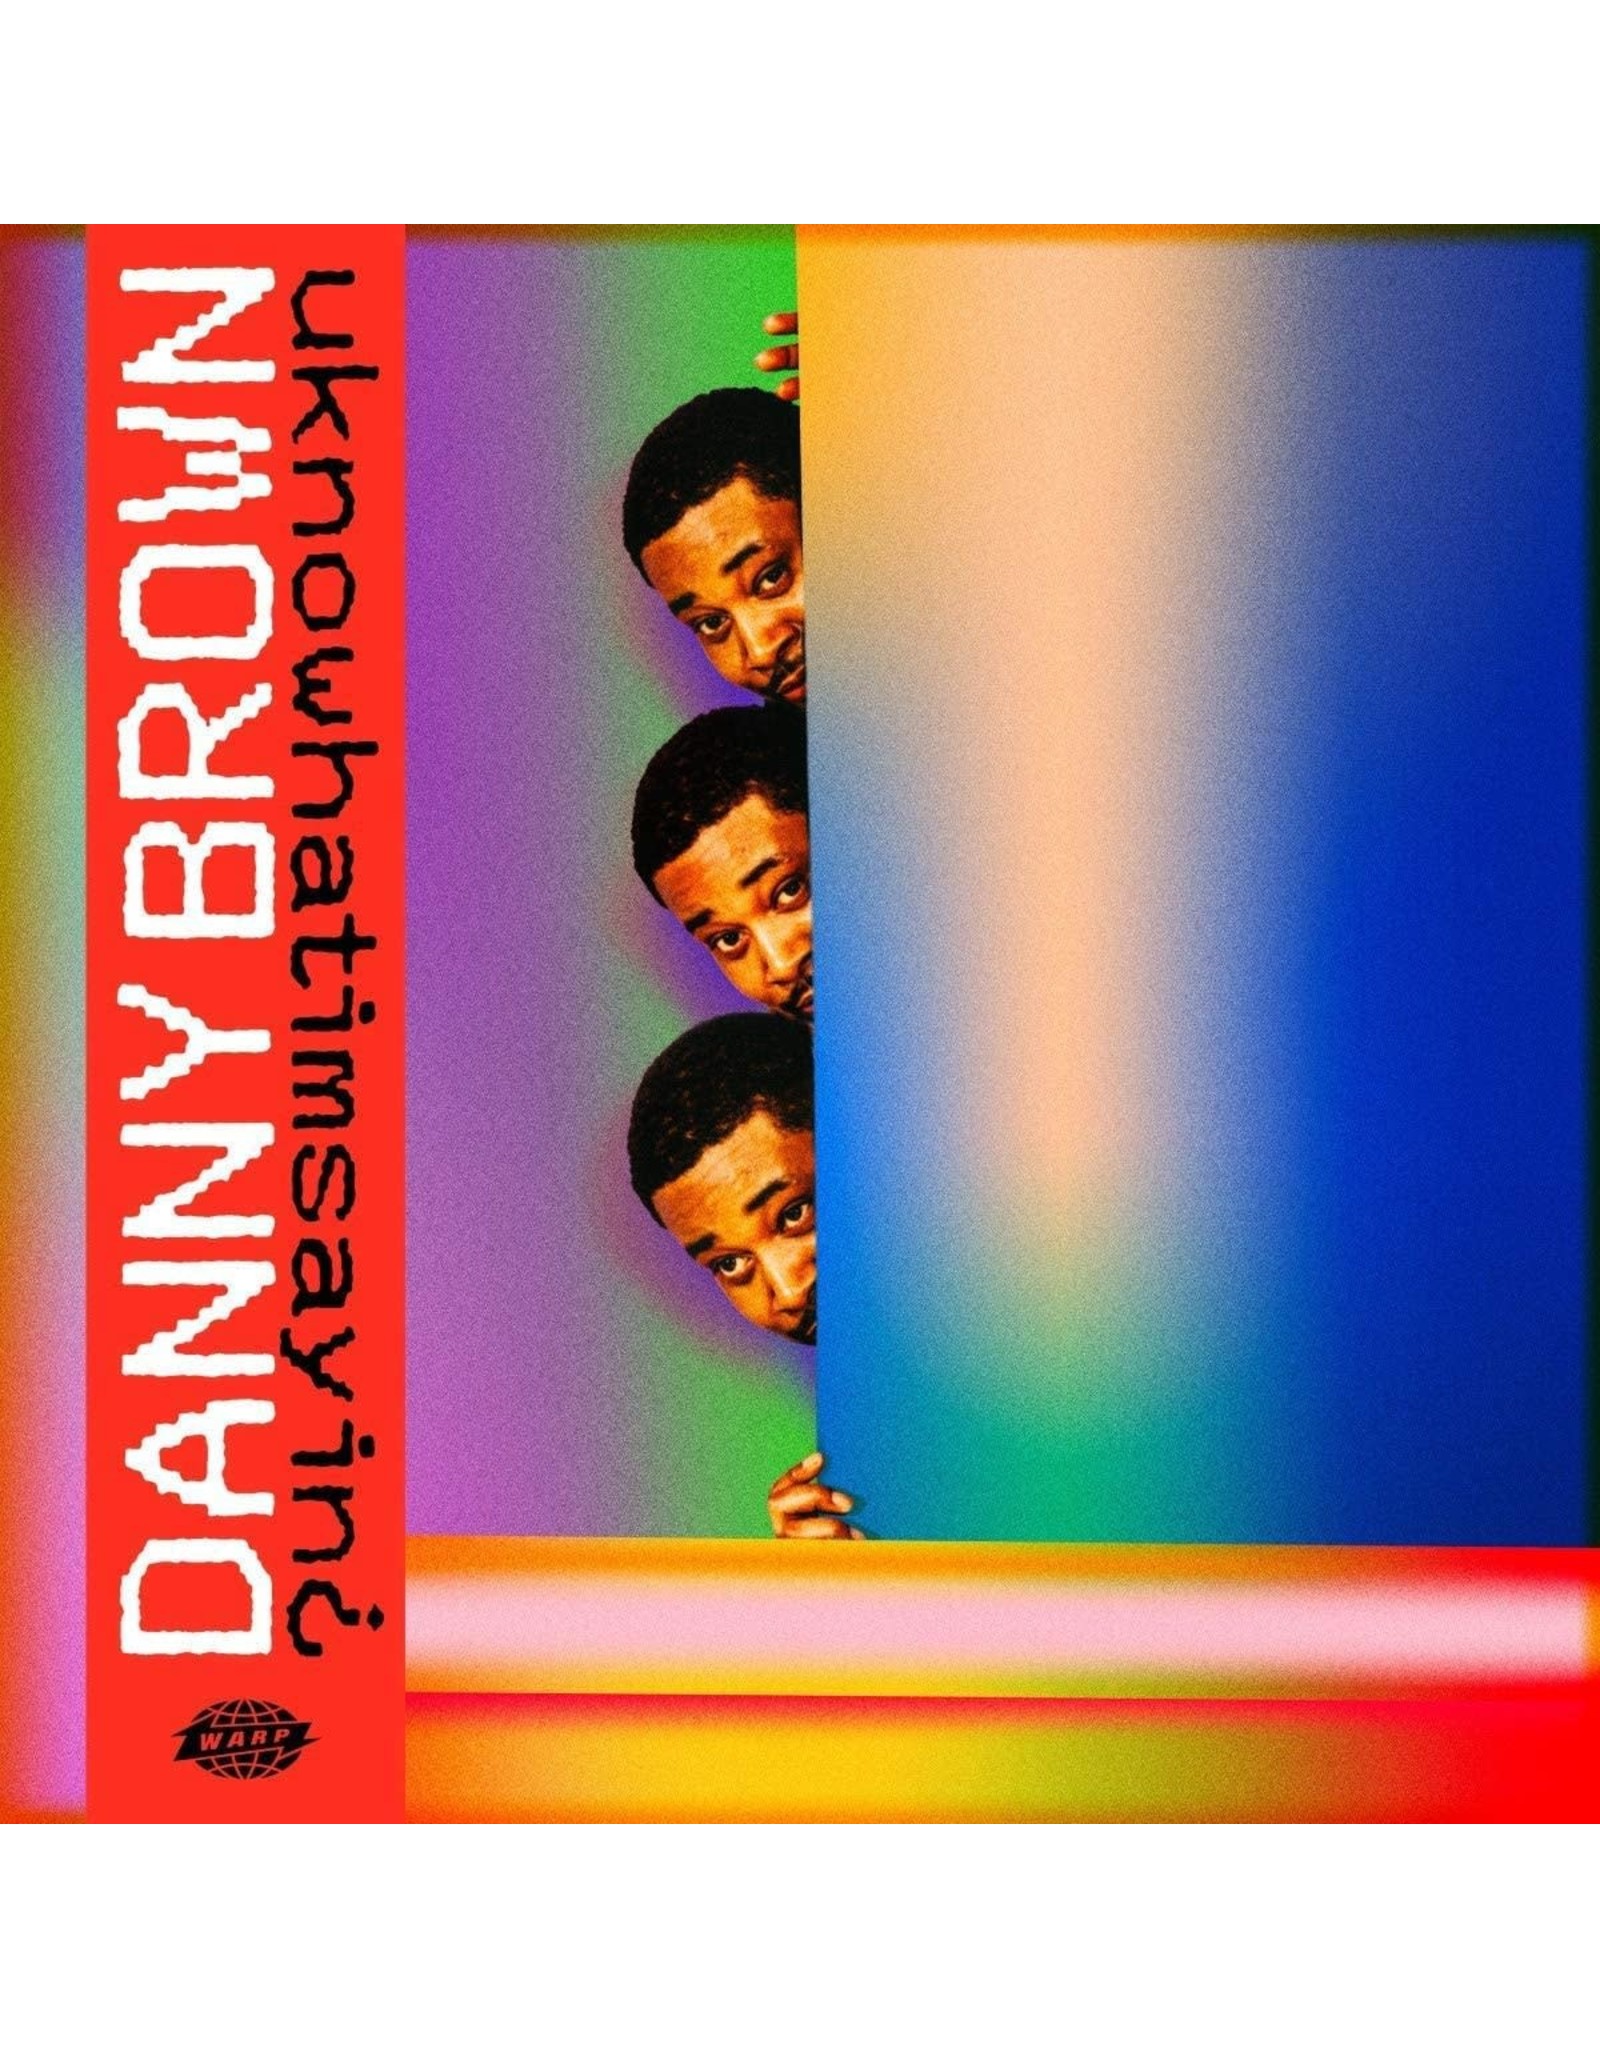 Danny Brown - uknowhatimsayin